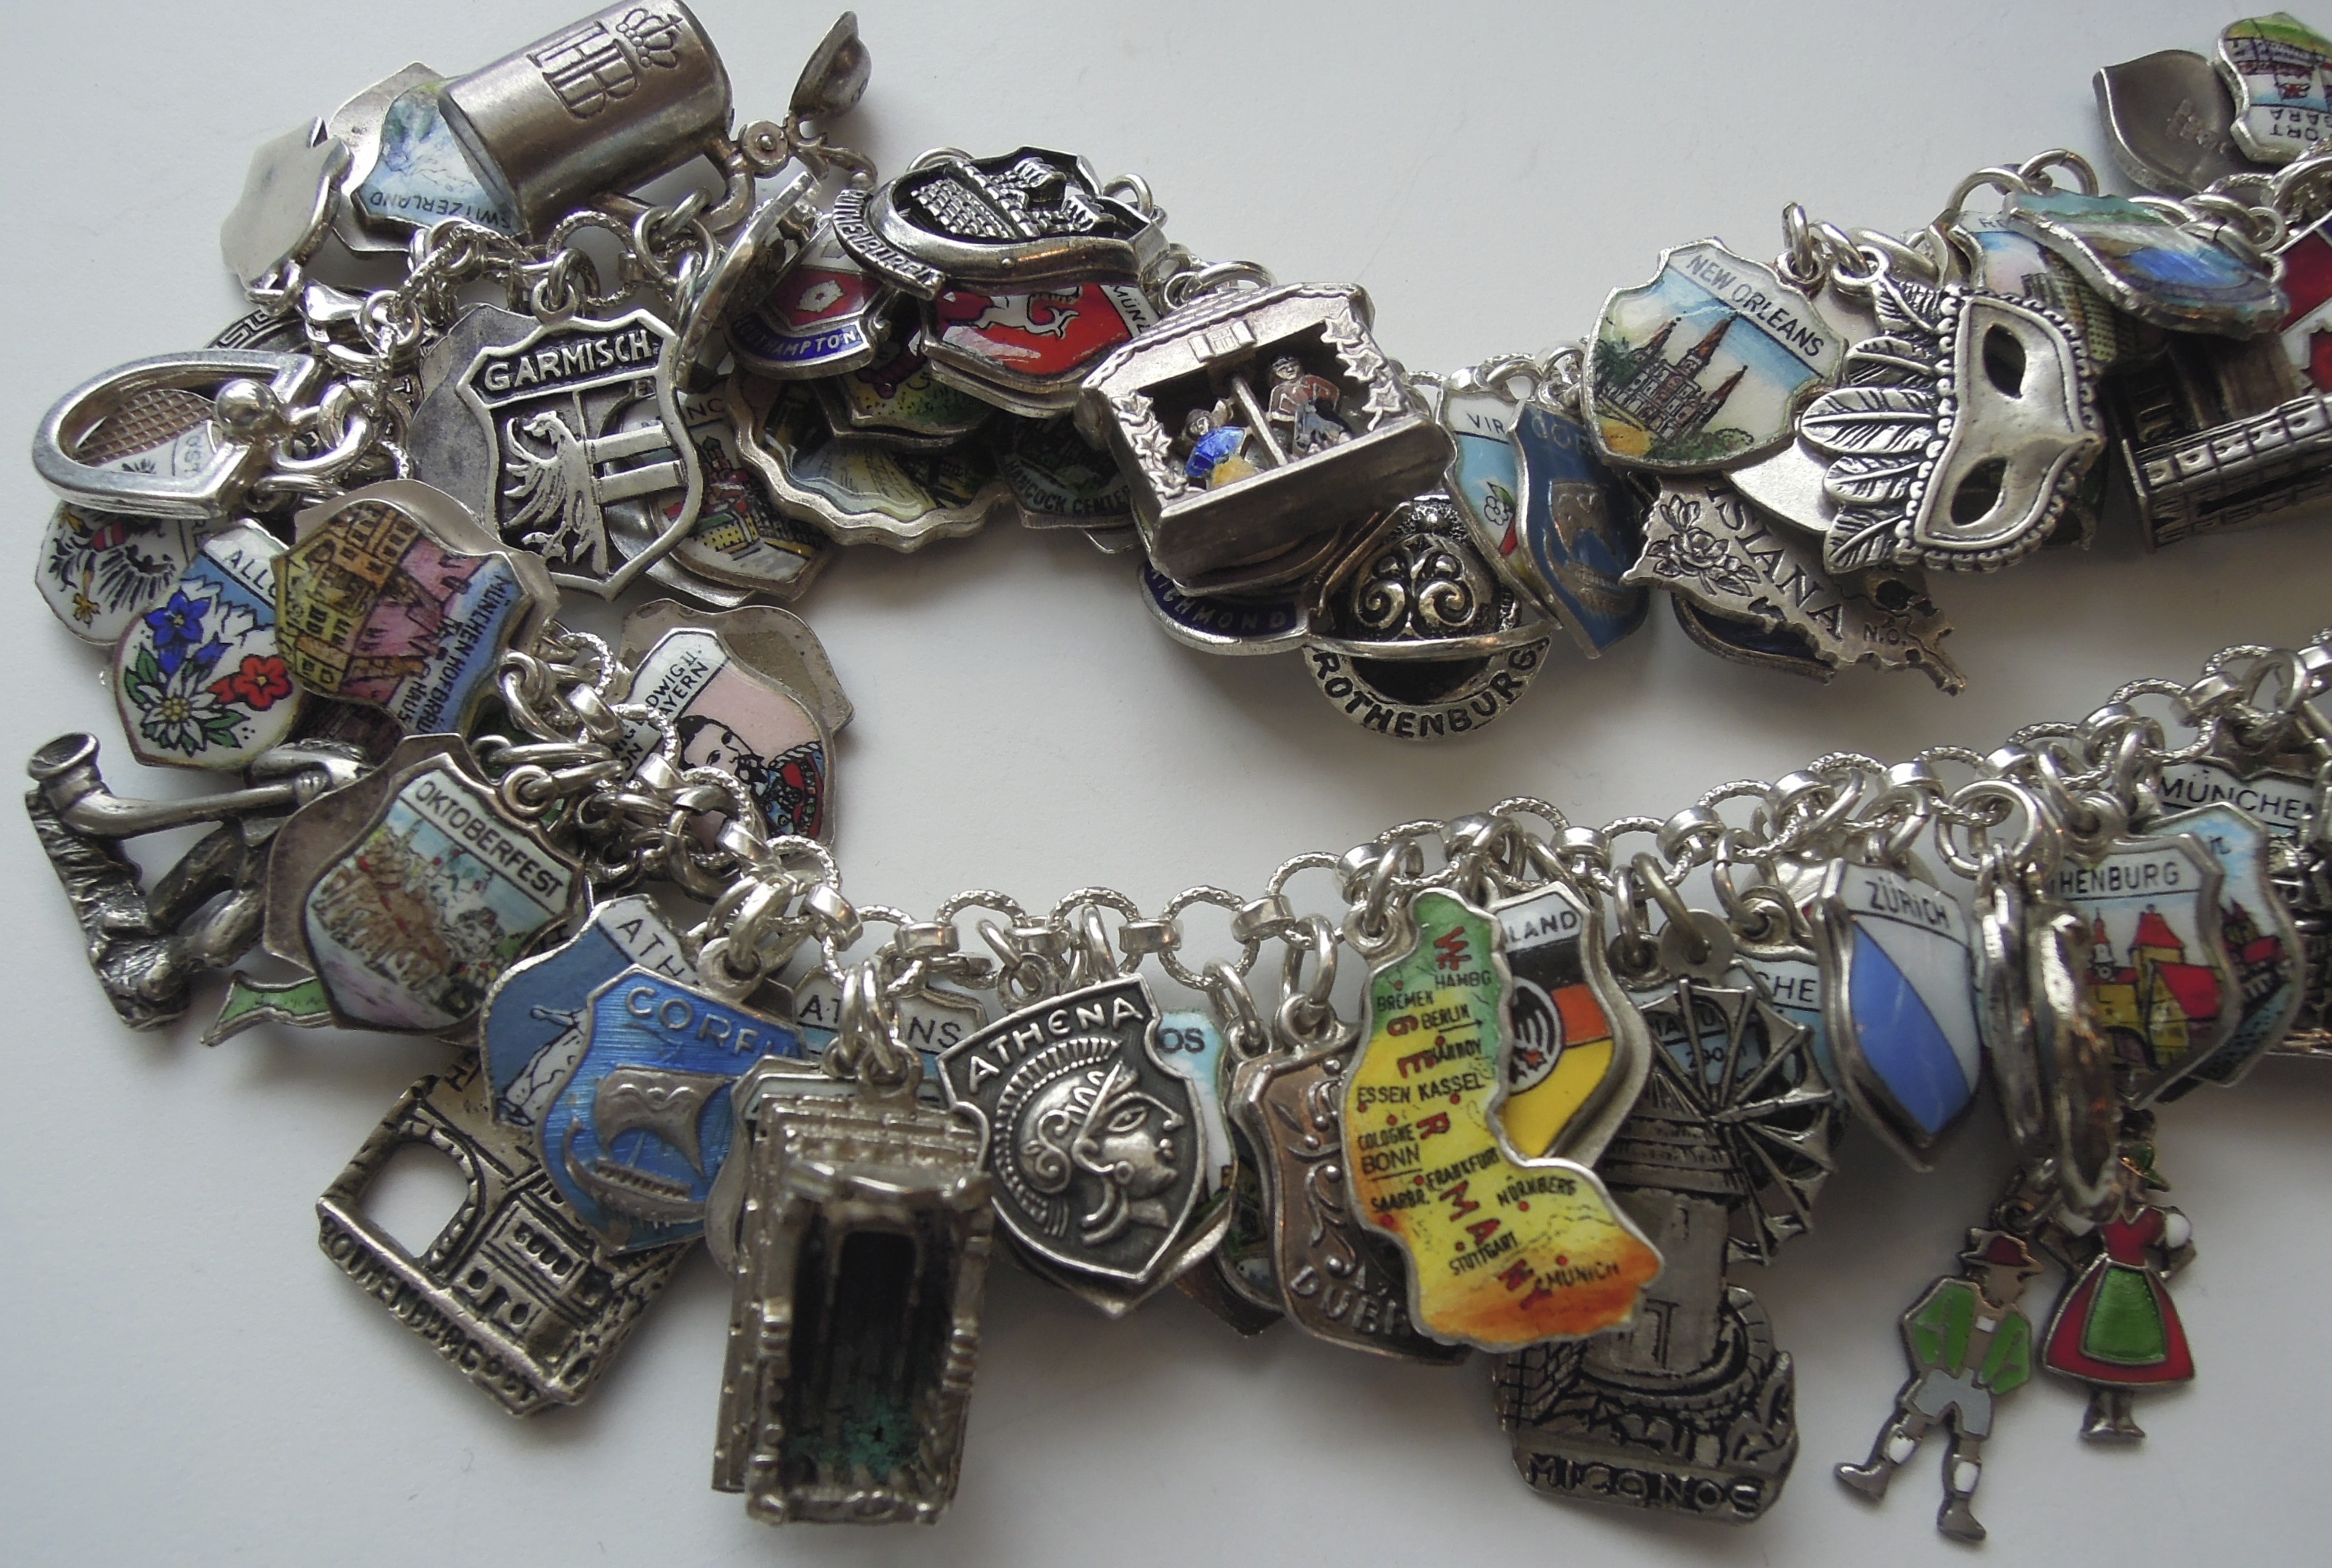 Vintage Charm Bracelet Collection - PIB Travel 2010